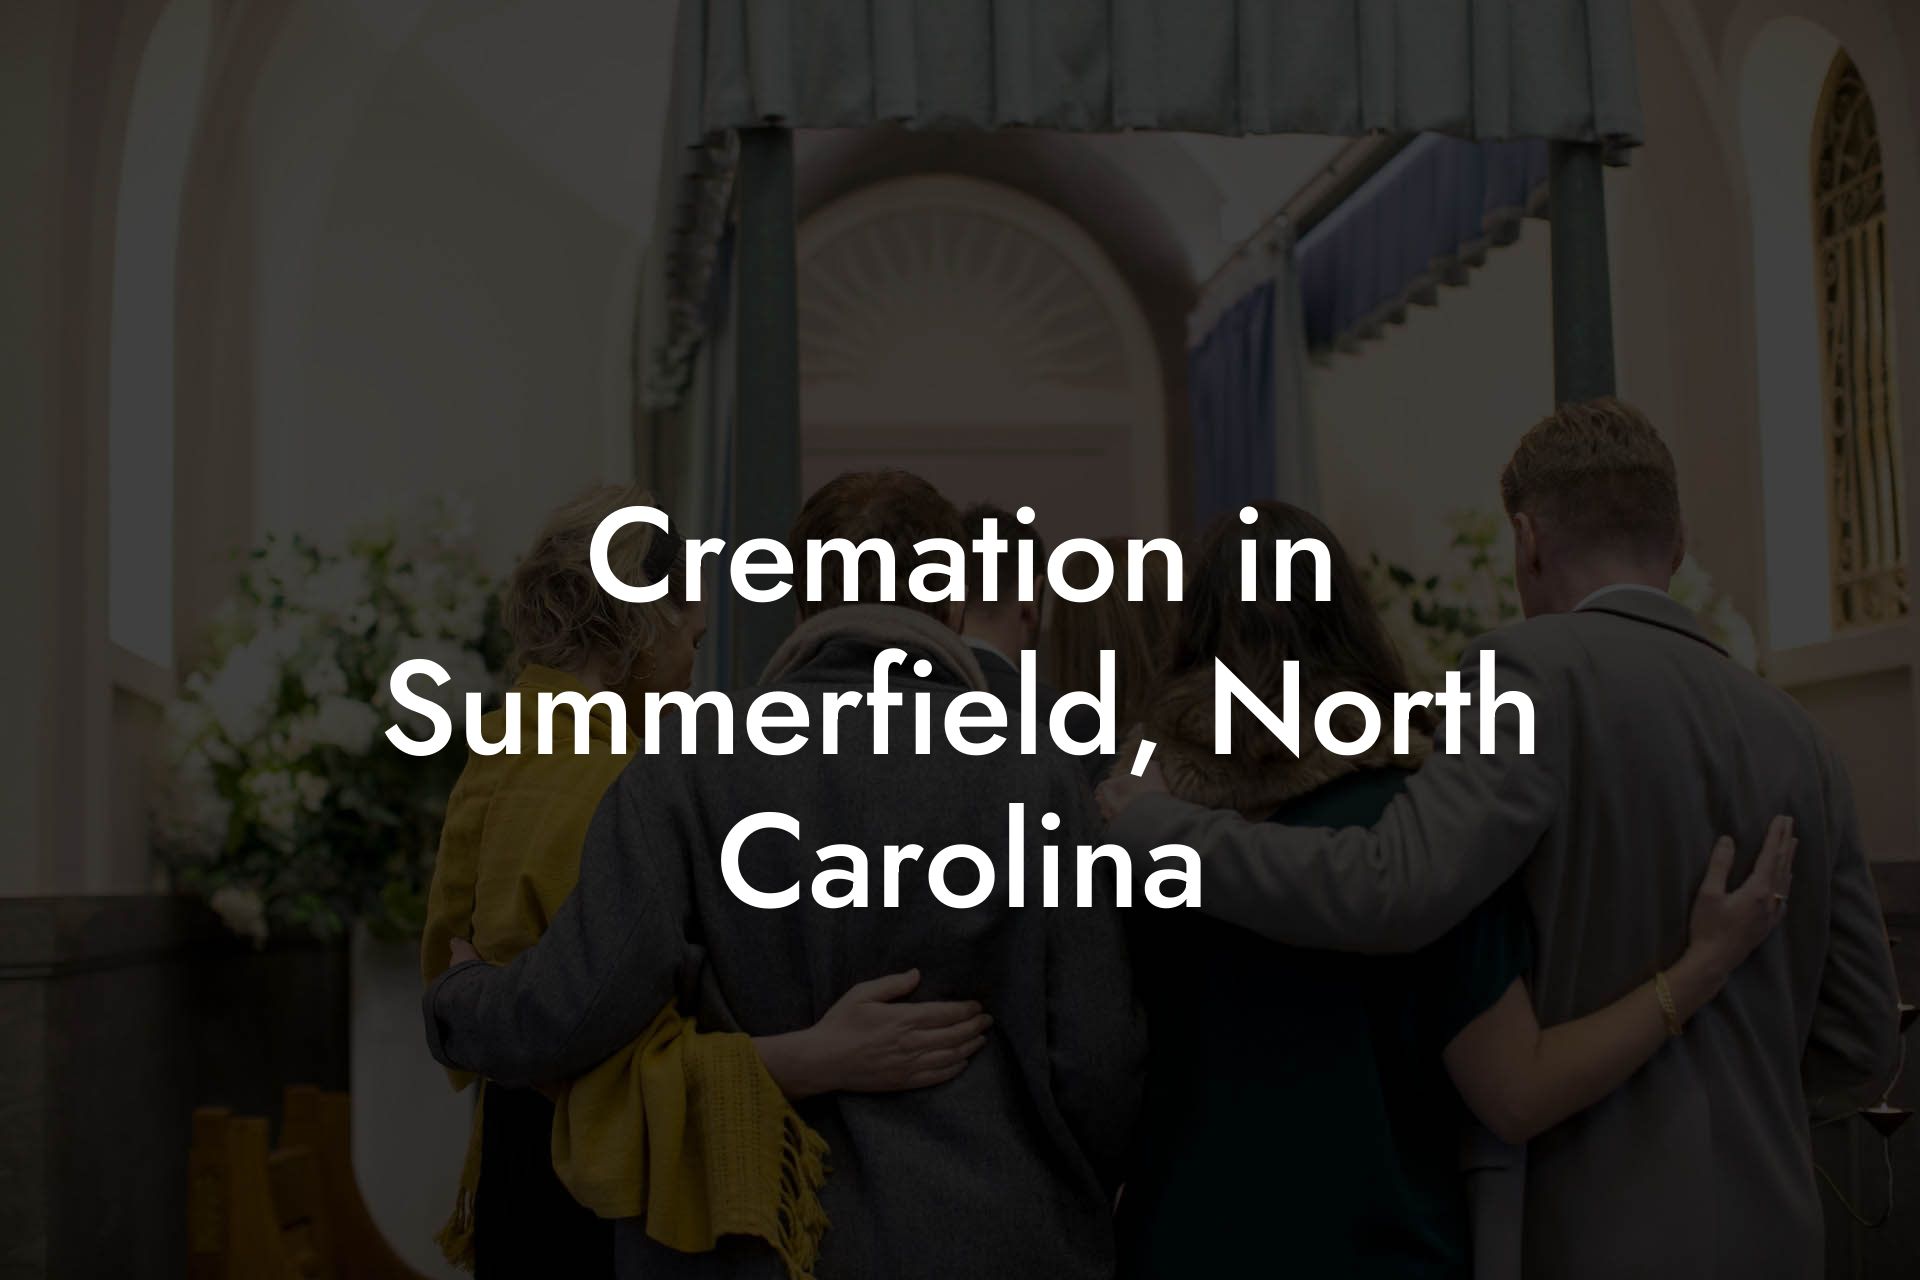 Cremation in Summerfield, North Carolina